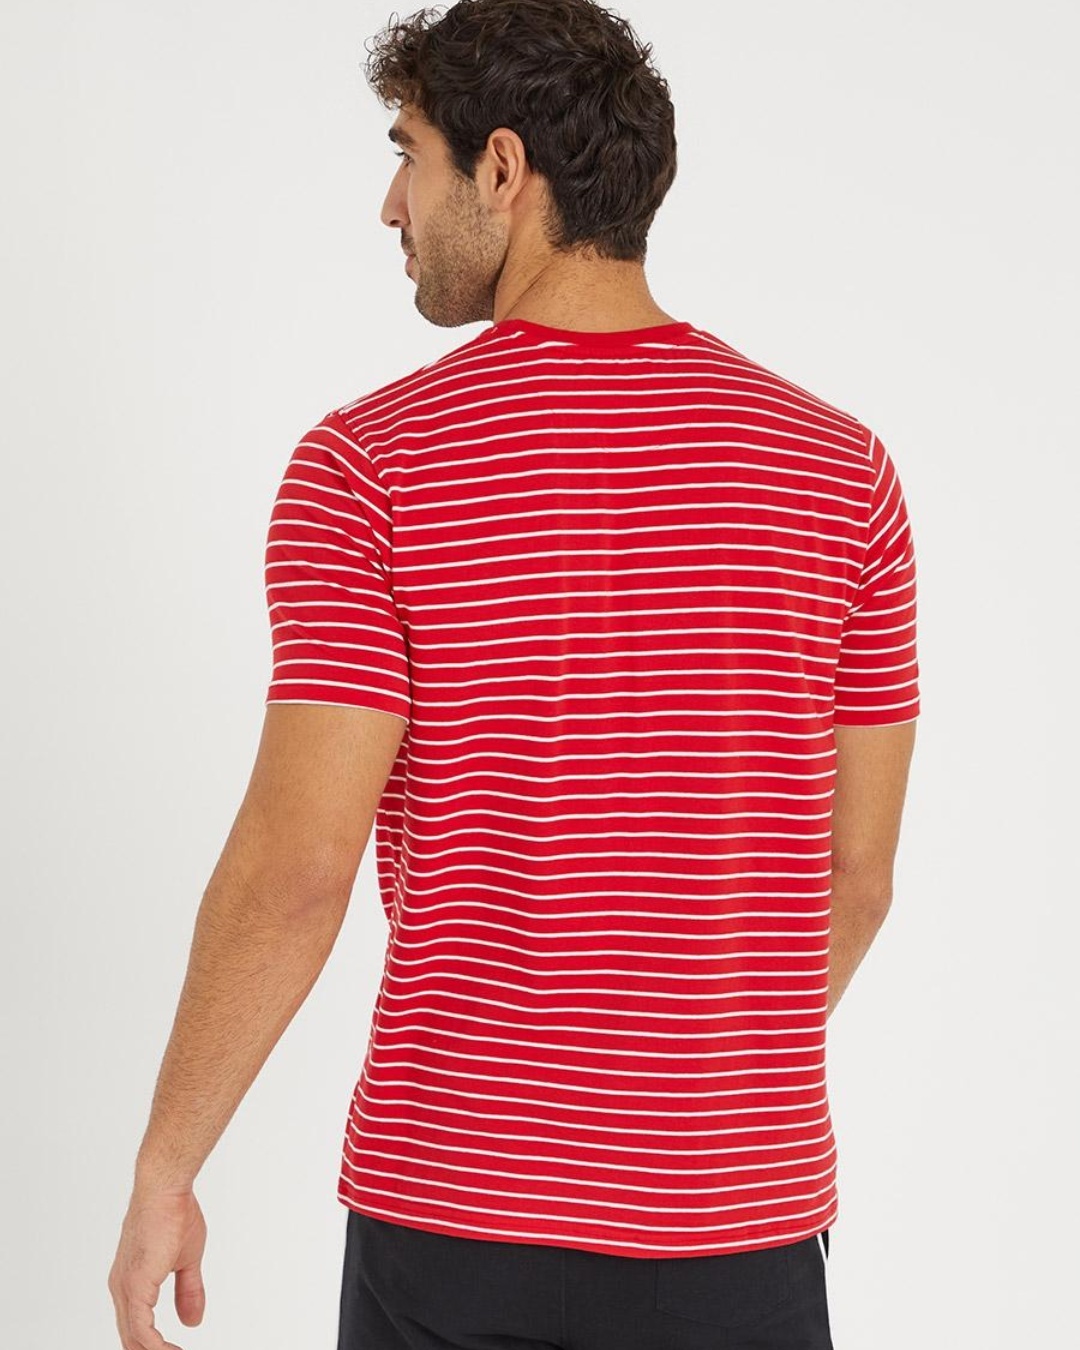 Buy Men's Red Striped T-shirt for Men Red Online at Bewakoof